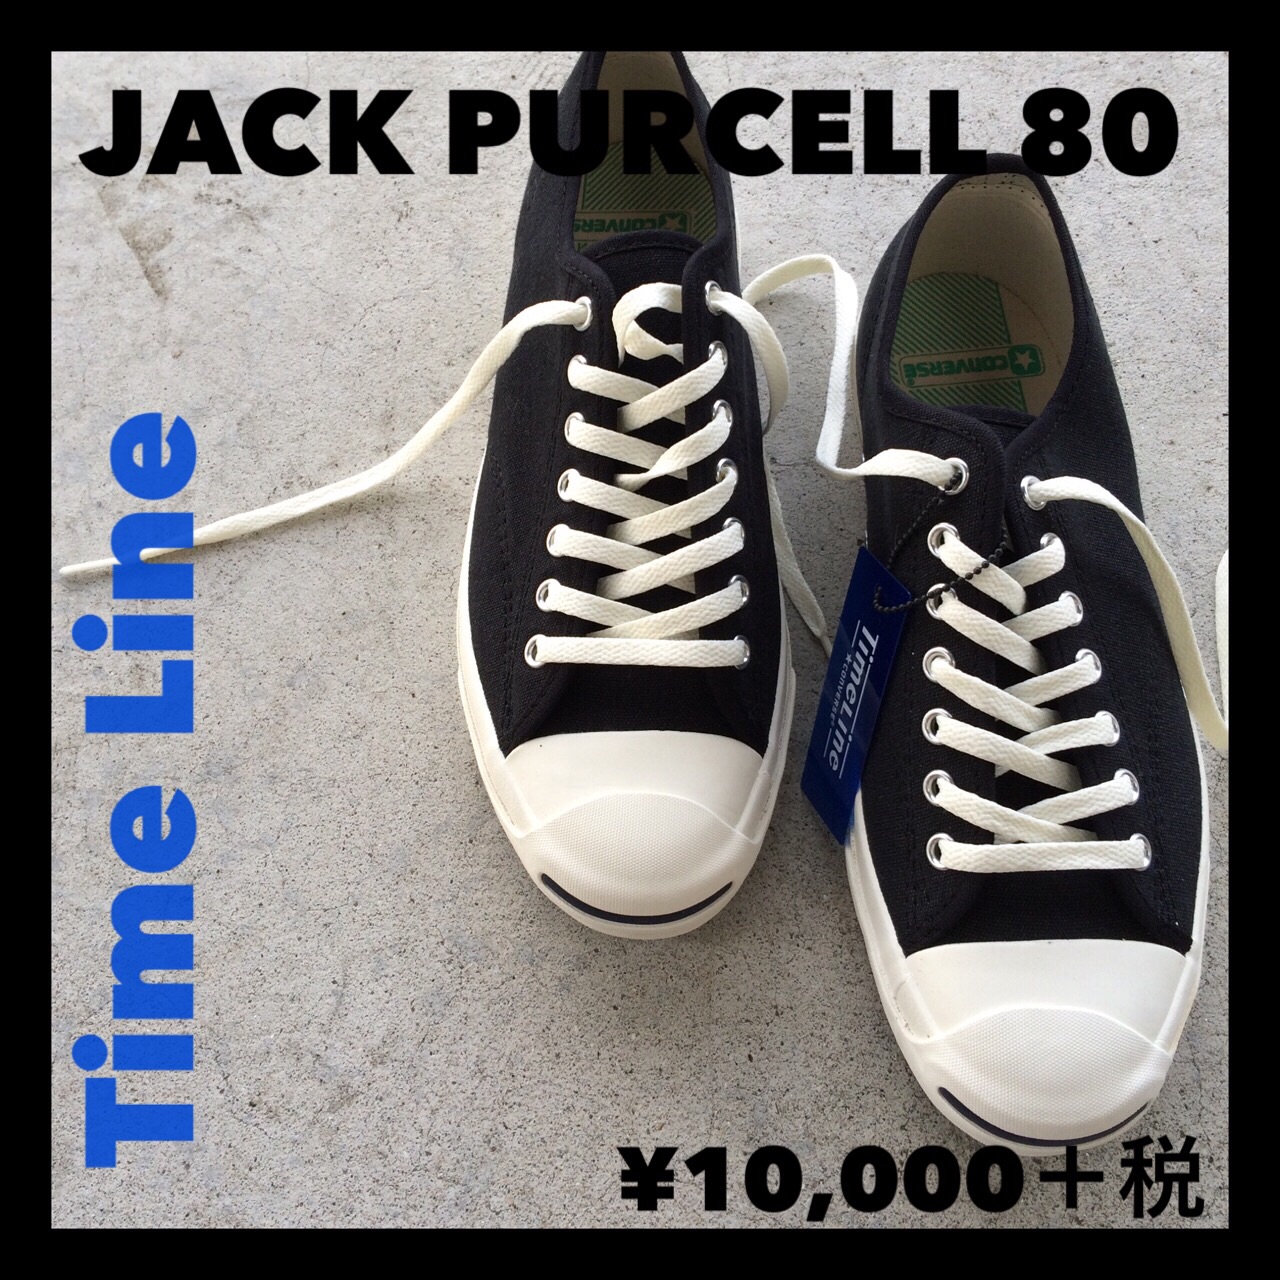 CONVERSE JACK PURCELL 80 J TIME LINE | hartwellspremium.com